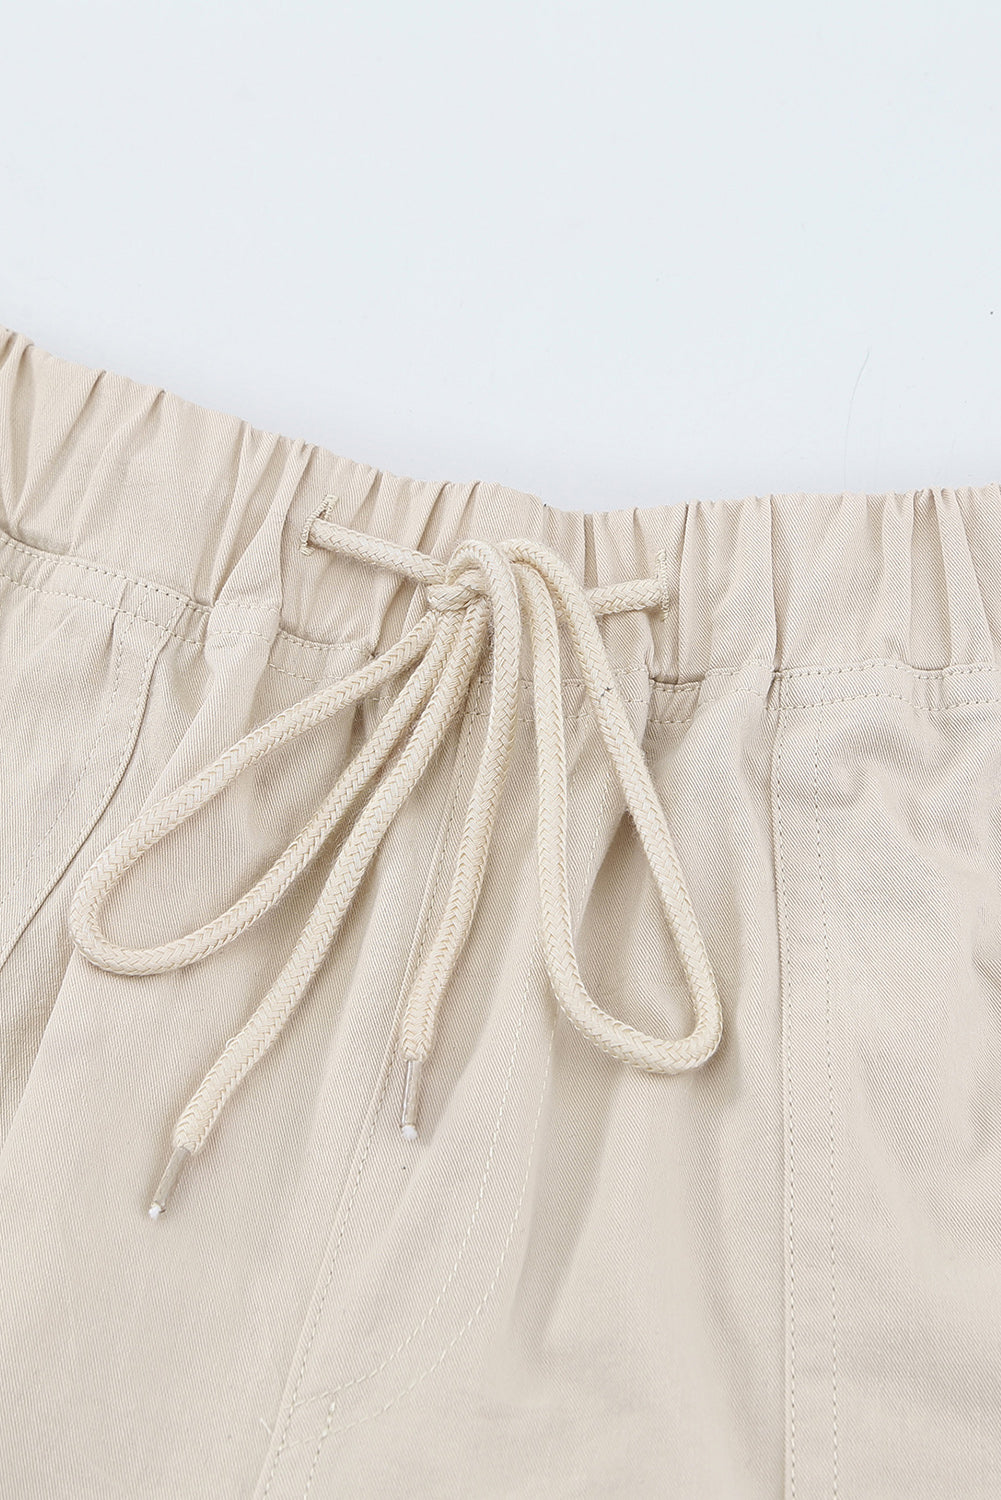 Khaki Solid Color Drawstring Frayed Hem Pocketed Shorts